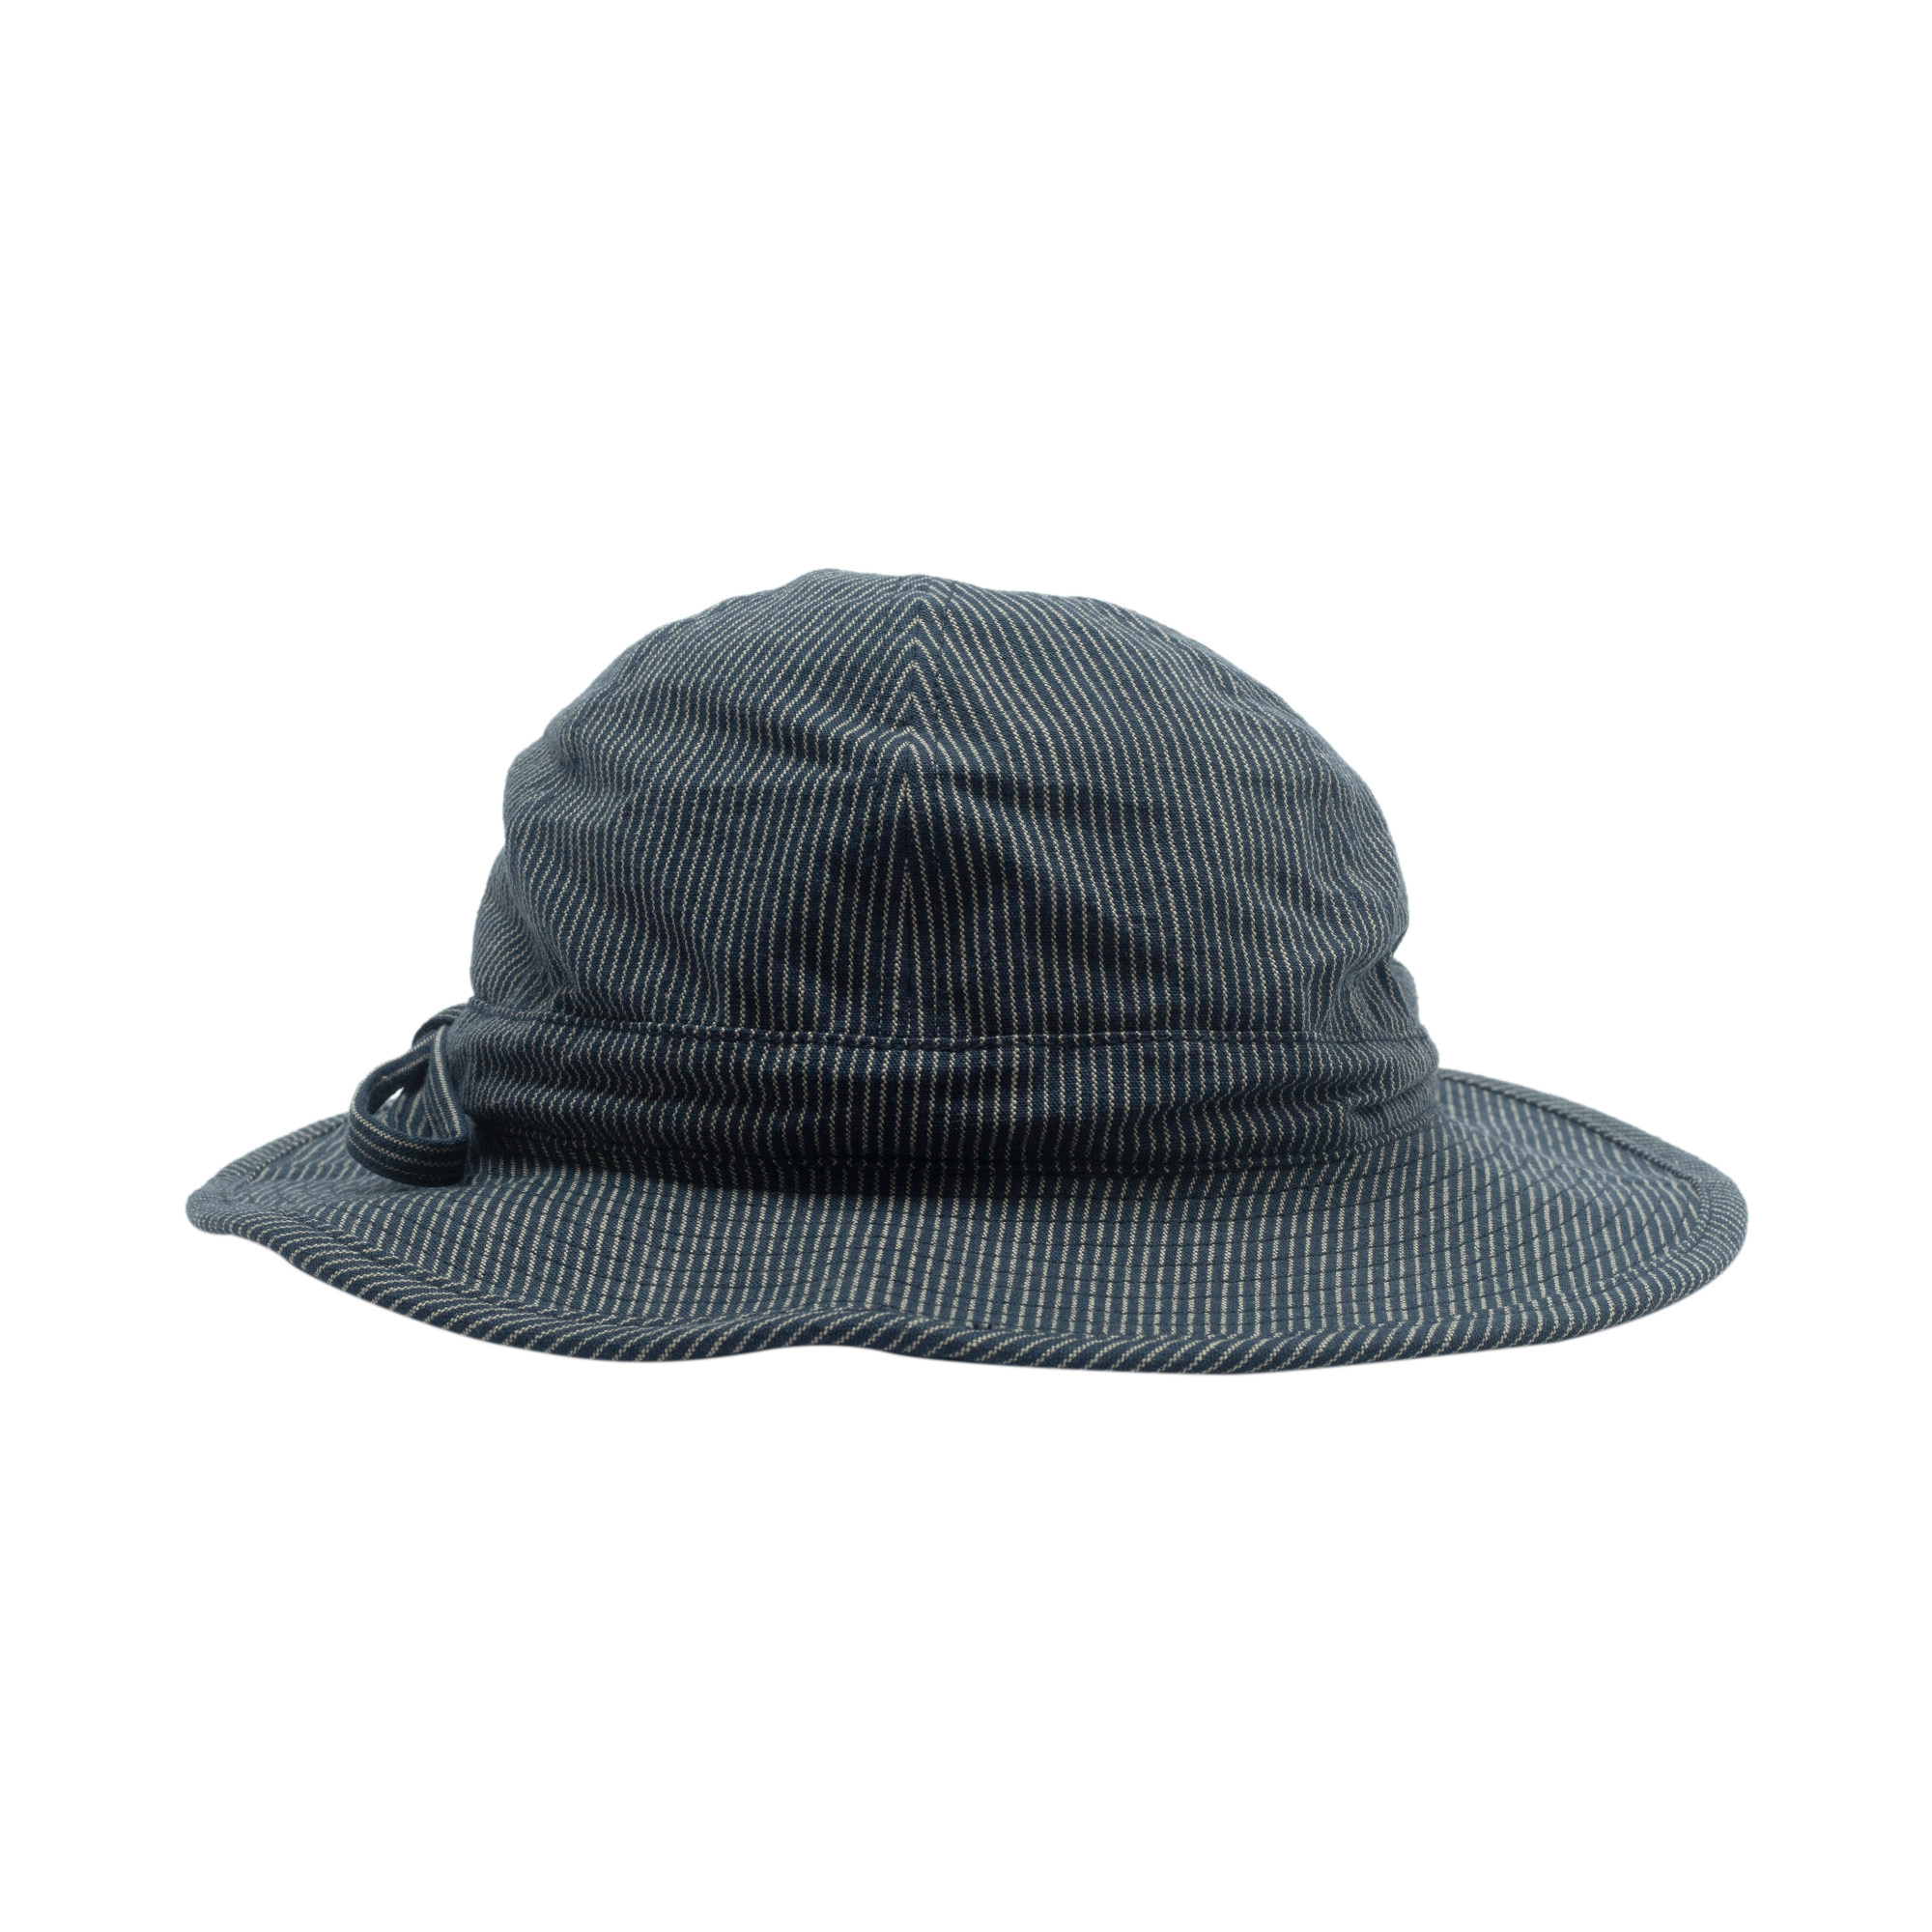 Old Joe - Gathered Fatigue Hat (Fade Stripe)